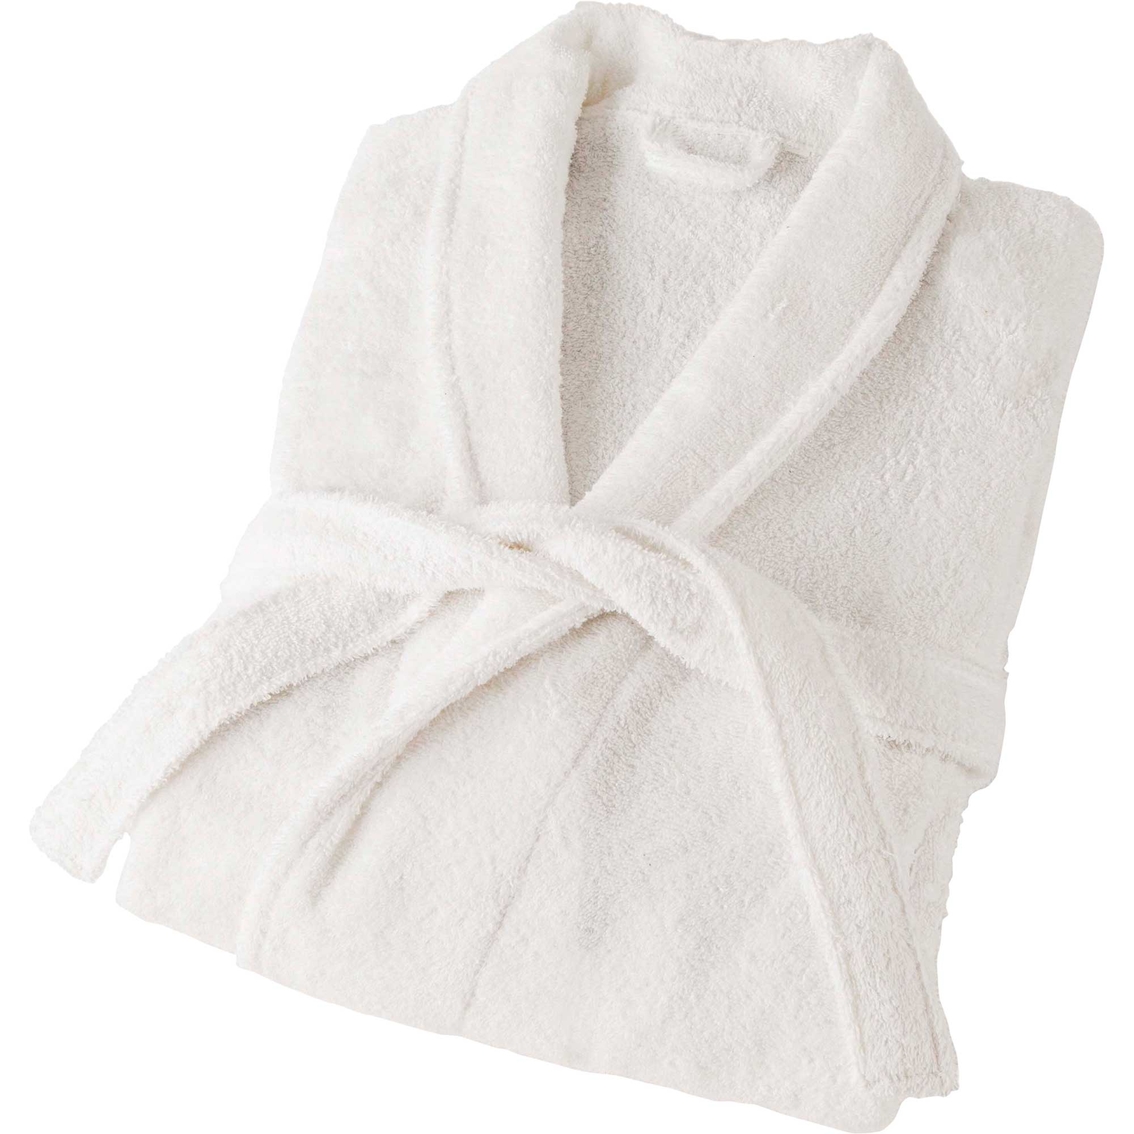 Martex Unisex Terry Bath Robe | Pajamas & Robes | Clothing ...